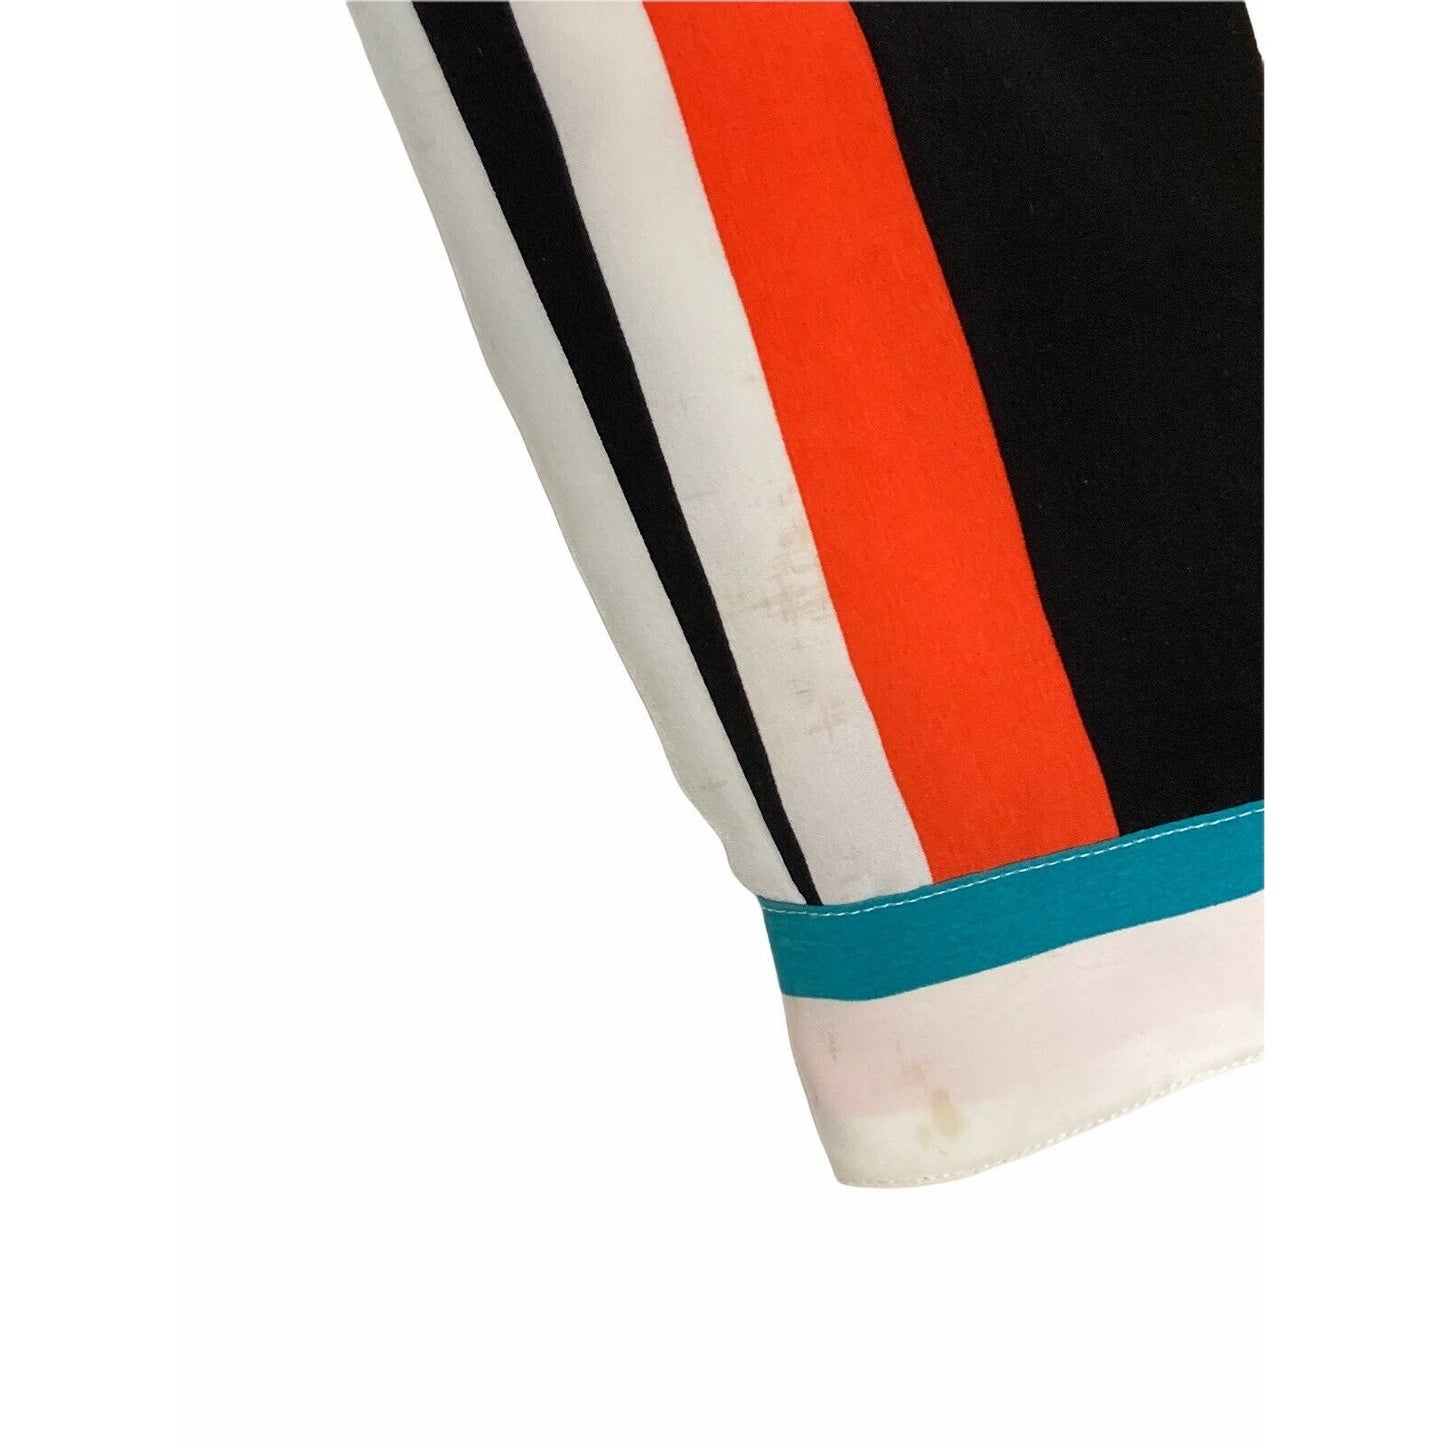 Vince Camuto Long Sleeve Colorful Stripes V Neck Blouse XS